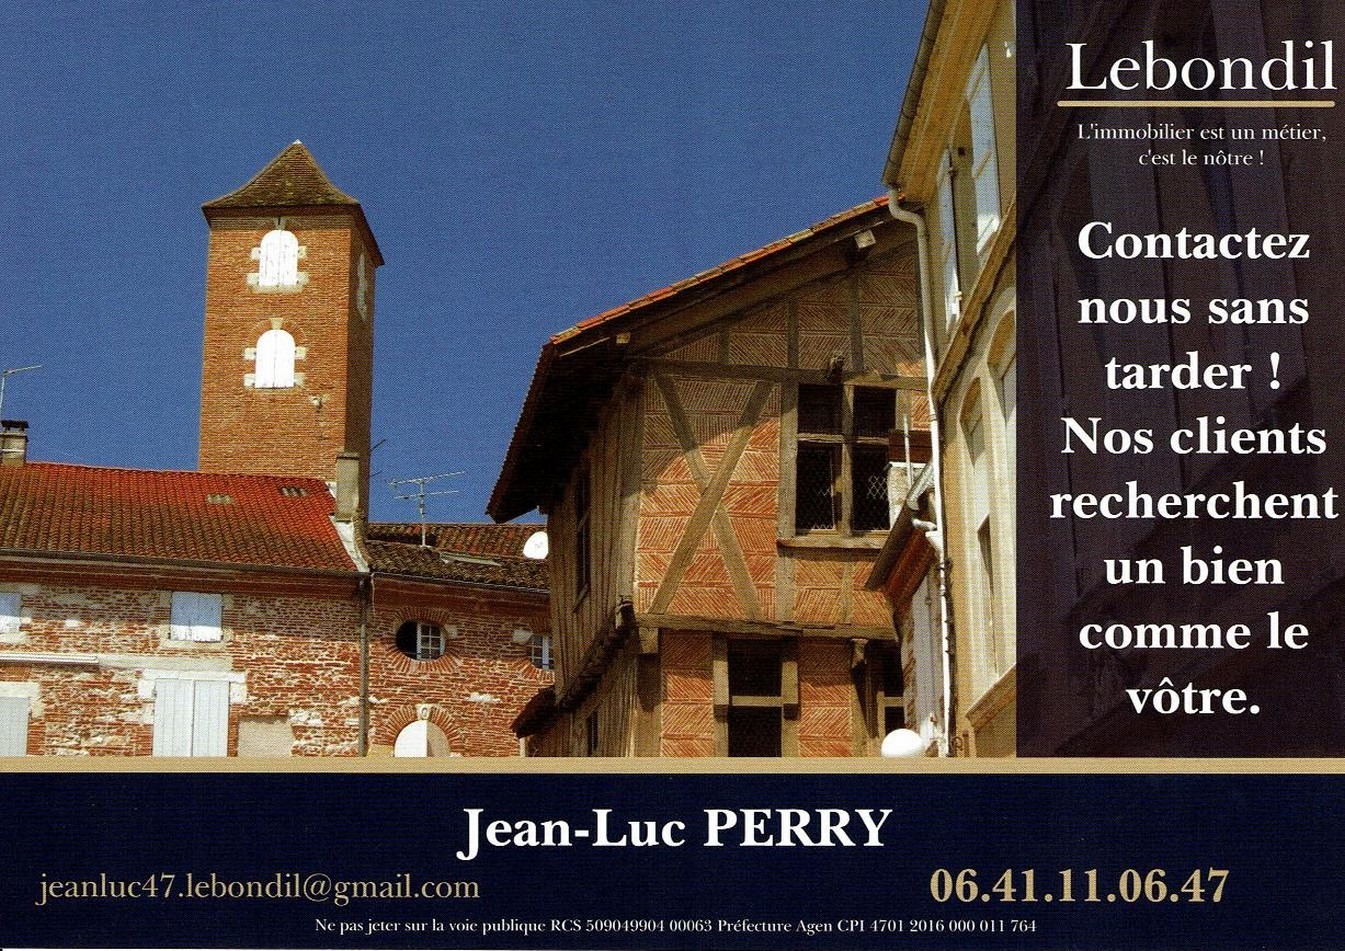 Jean Luc PERRY - LEBONDIL IMMOBILIER.jpg